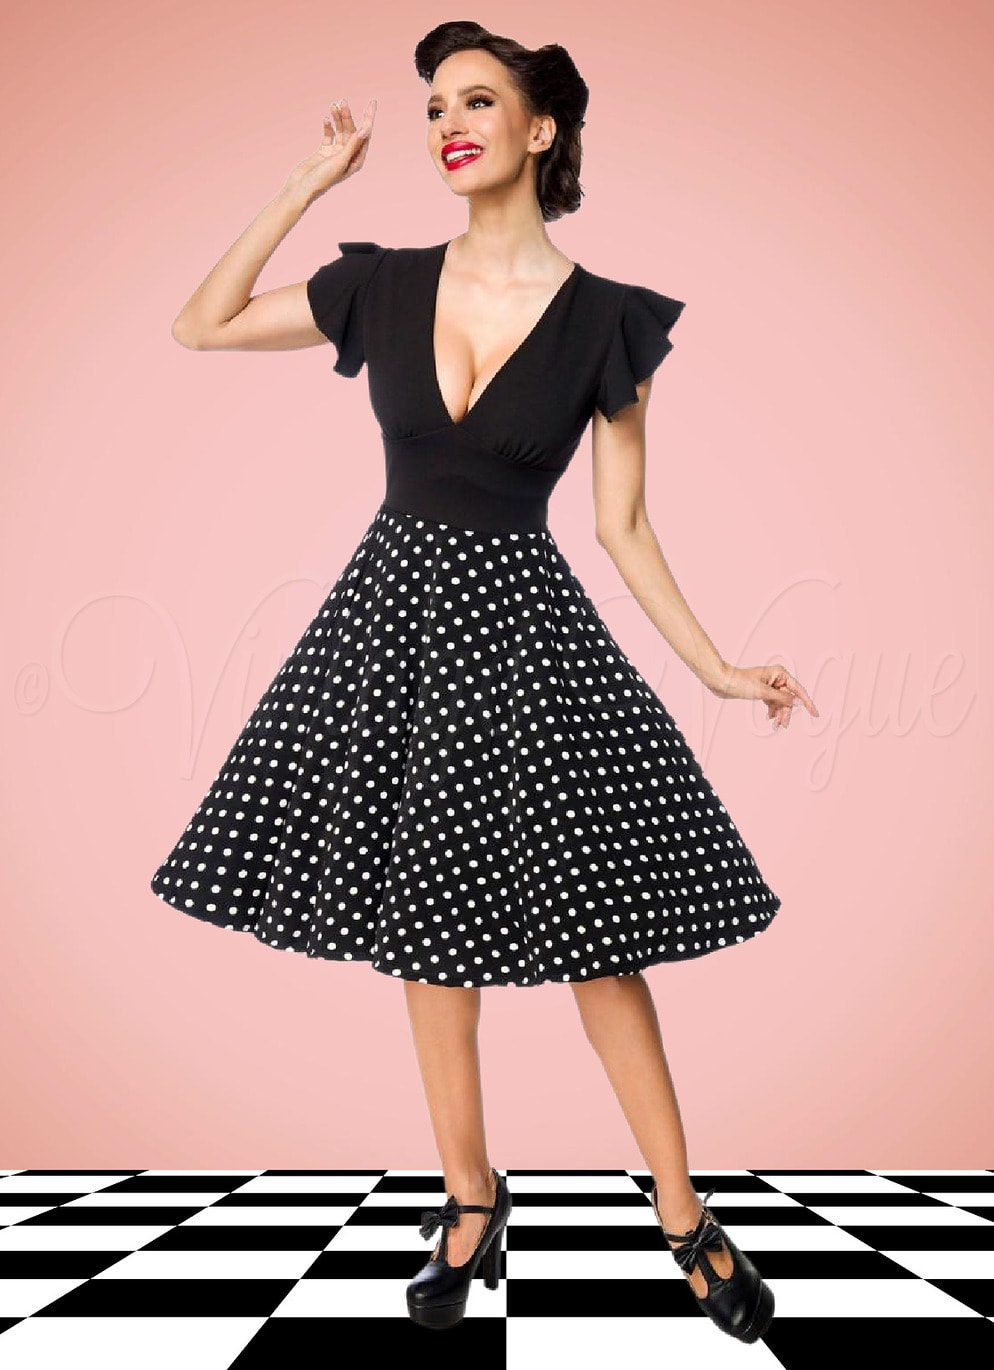 Belsira 50's Retro Rockabilly Pin-Up Swing Kleid mit Polka Dots Punkte in Schwarz Weiß Petticoat Damen Damenkleid gepunktet tupfen Jive Lindy Hop Mottoparty Rock n Roll